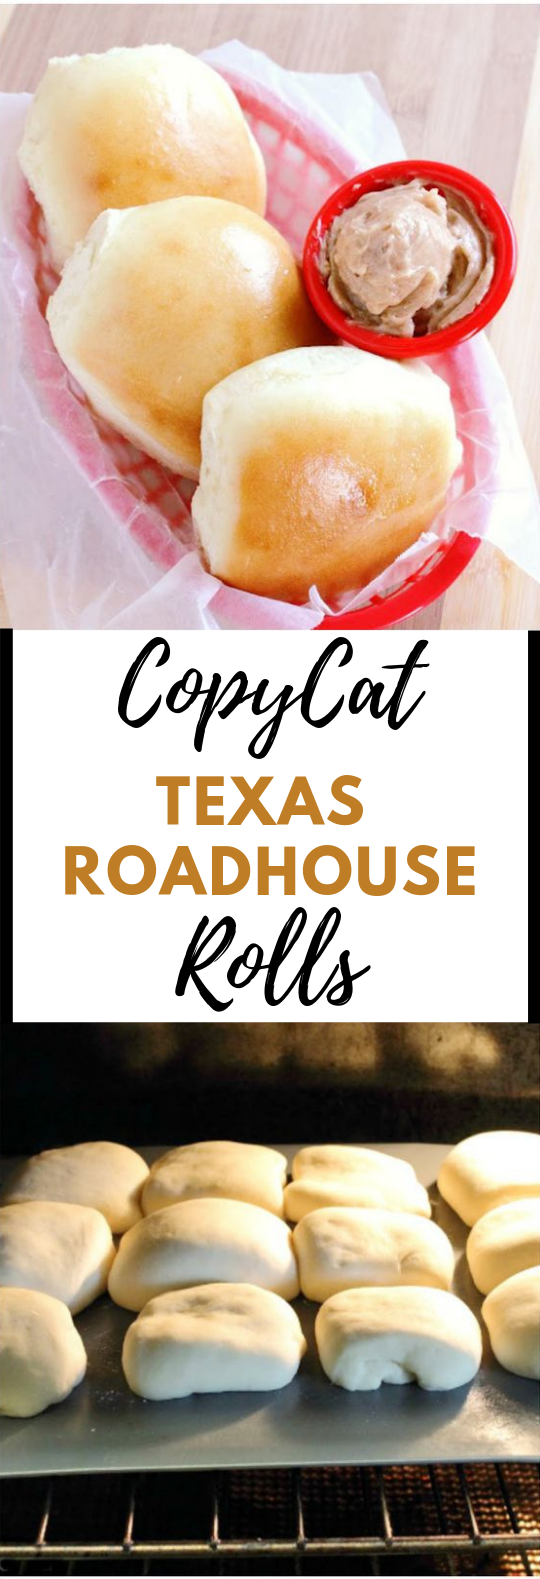 Copycat Texas Roadhouse Rolls and Cinnamon Butter Recipe #Copycat #Dinner